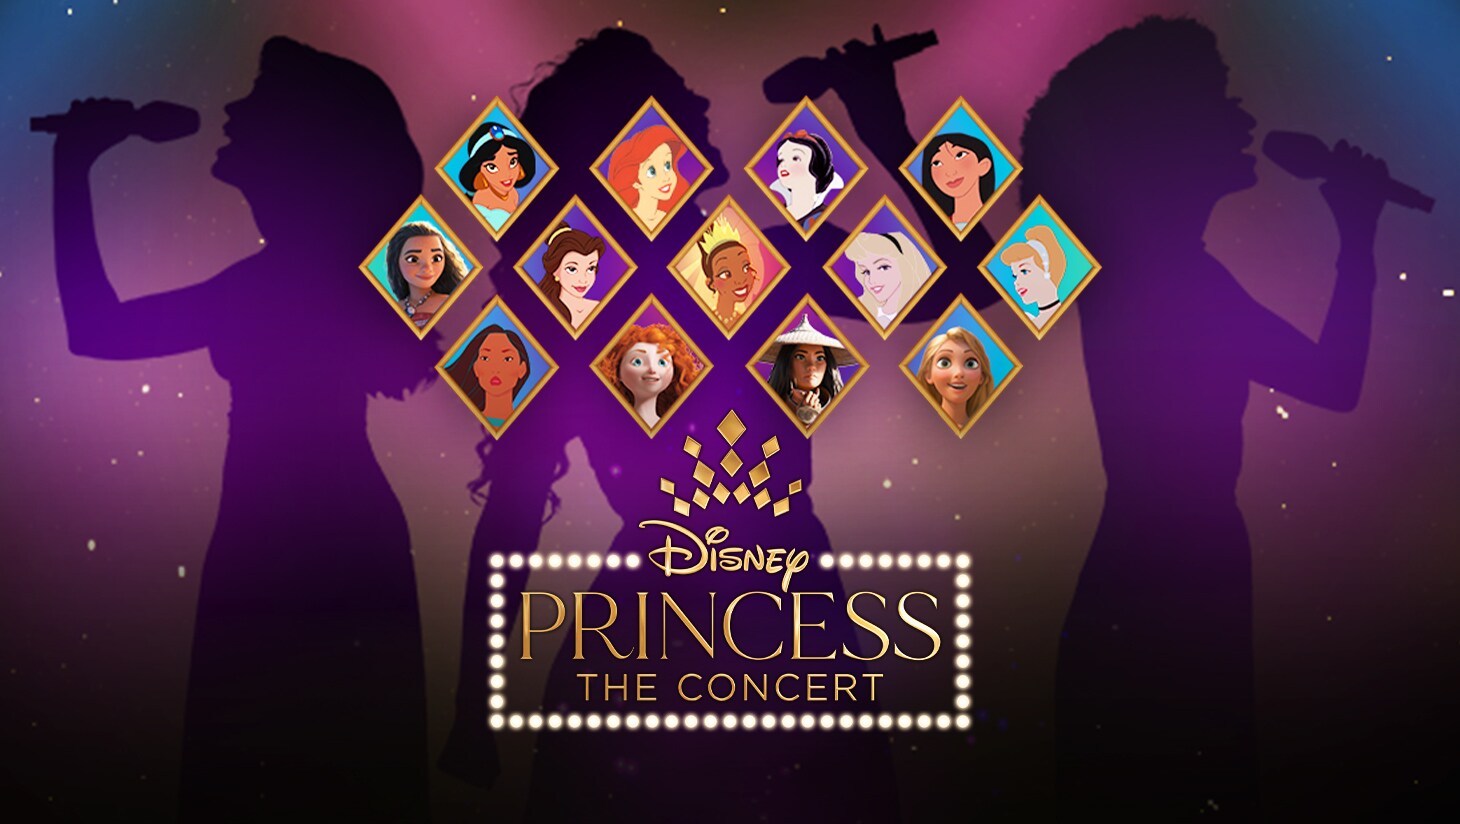 Disney Princess the Concert | Faces of the Disney princesses in diamond thumbnails